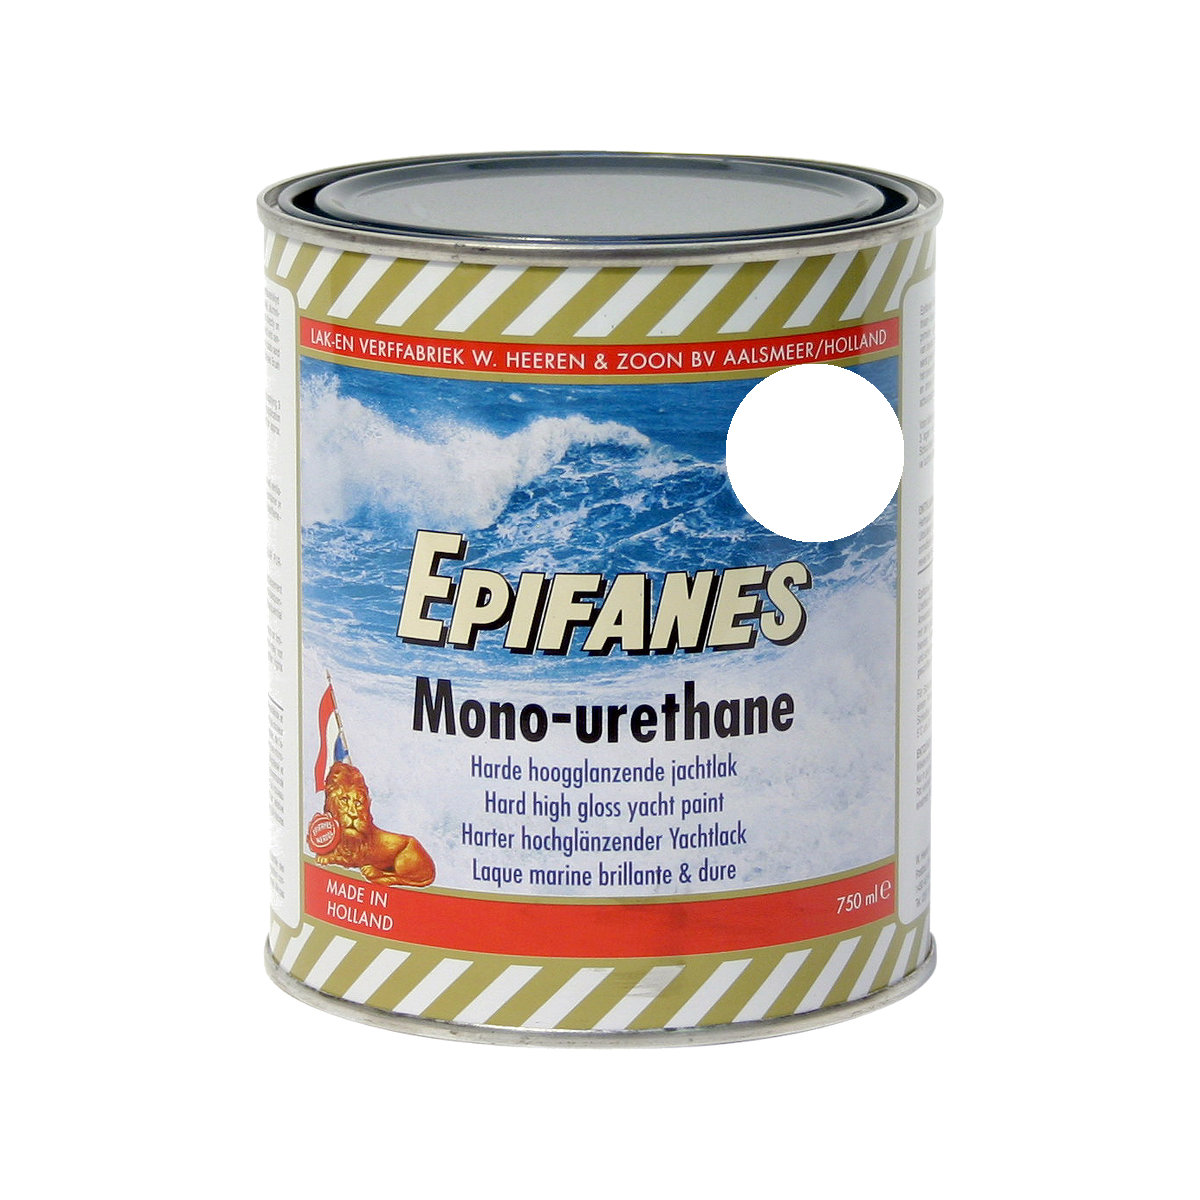 Epifanes mono-urethane jachtlak - wit 3100, 750ml